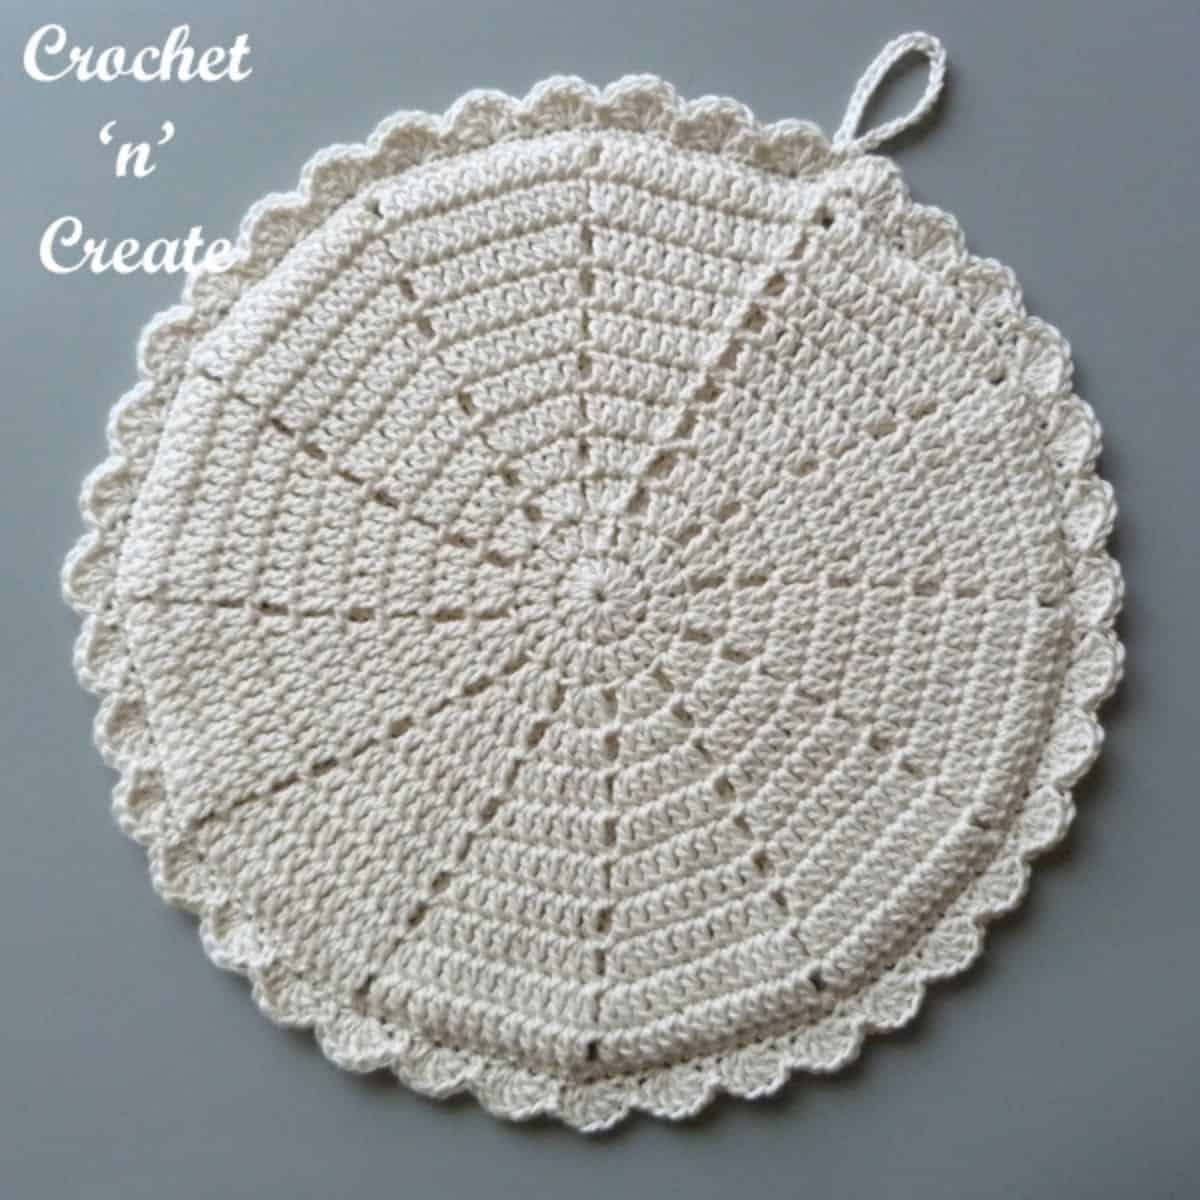 ivory colored crochet round potholder laying flat